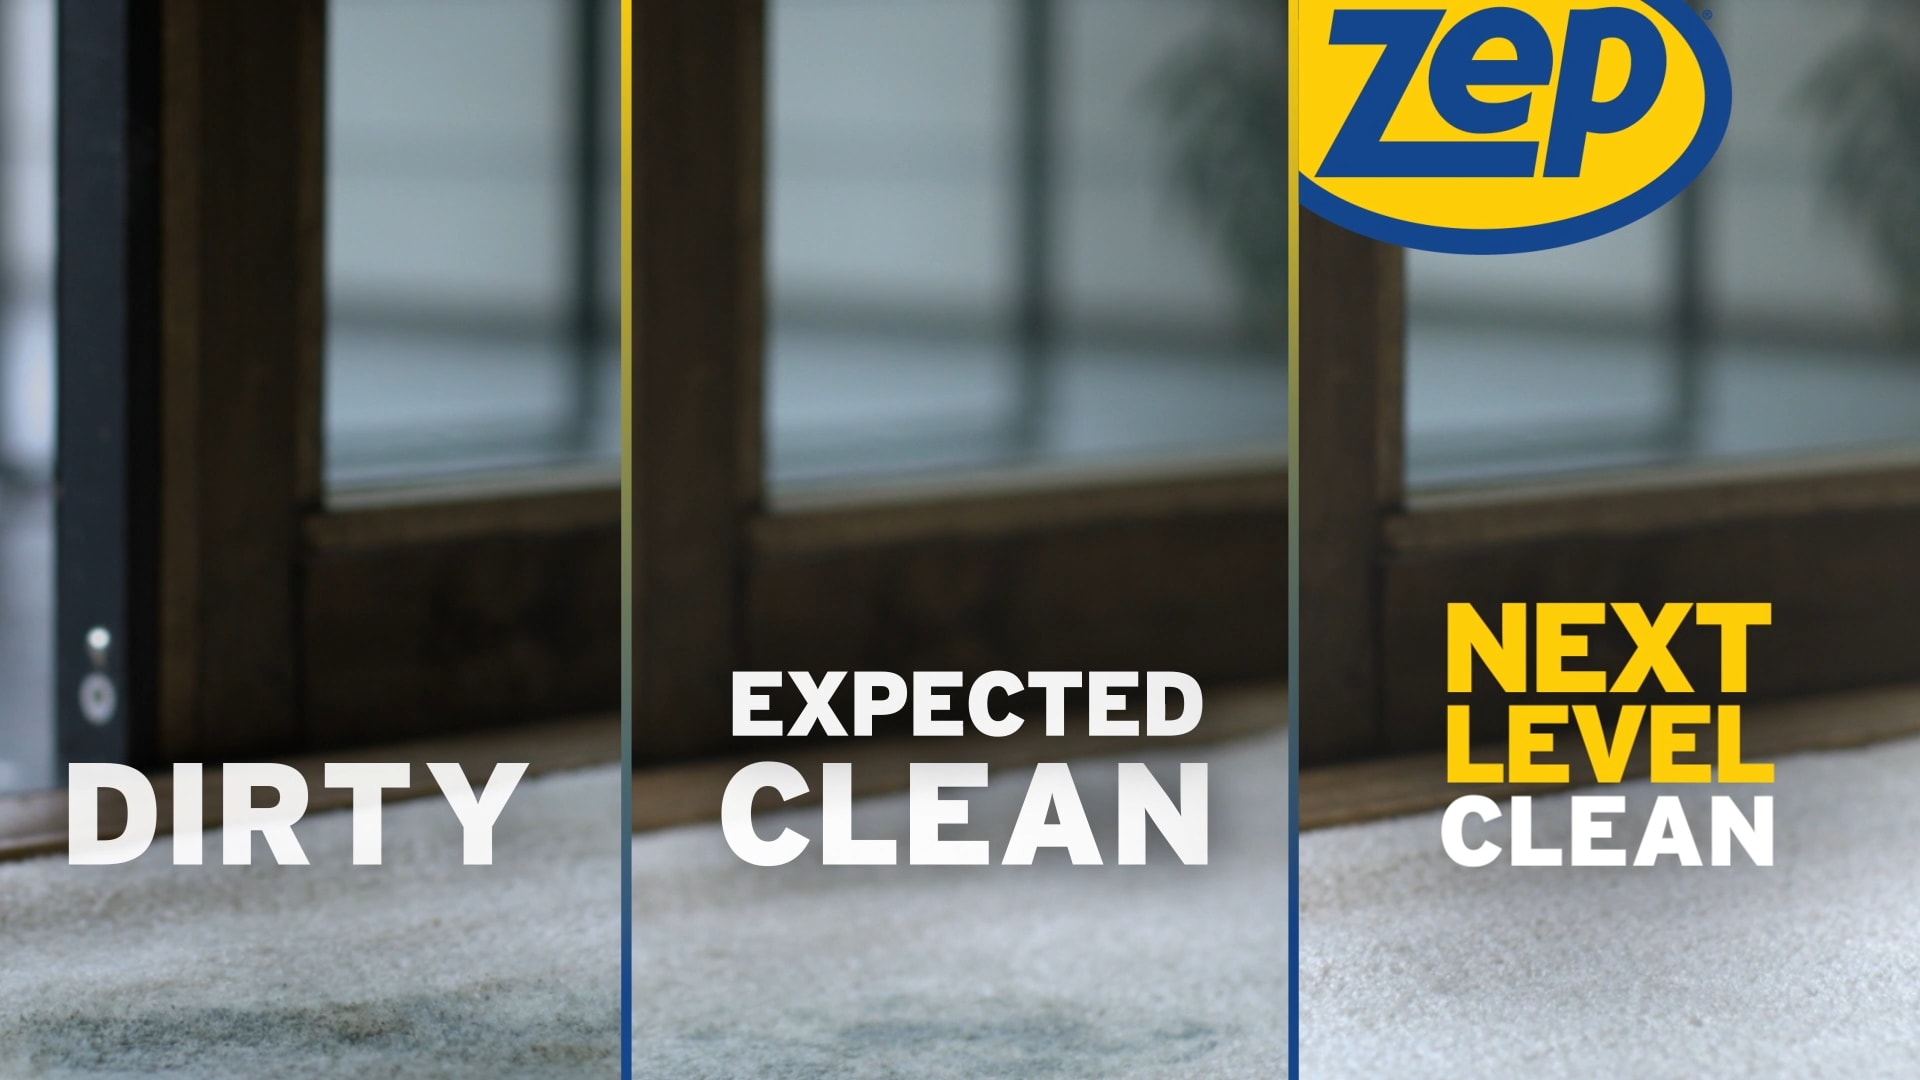 Zep All-Purpose Carpet Shampoo Concentrate Carpet Cleaner Liquid 128-oz